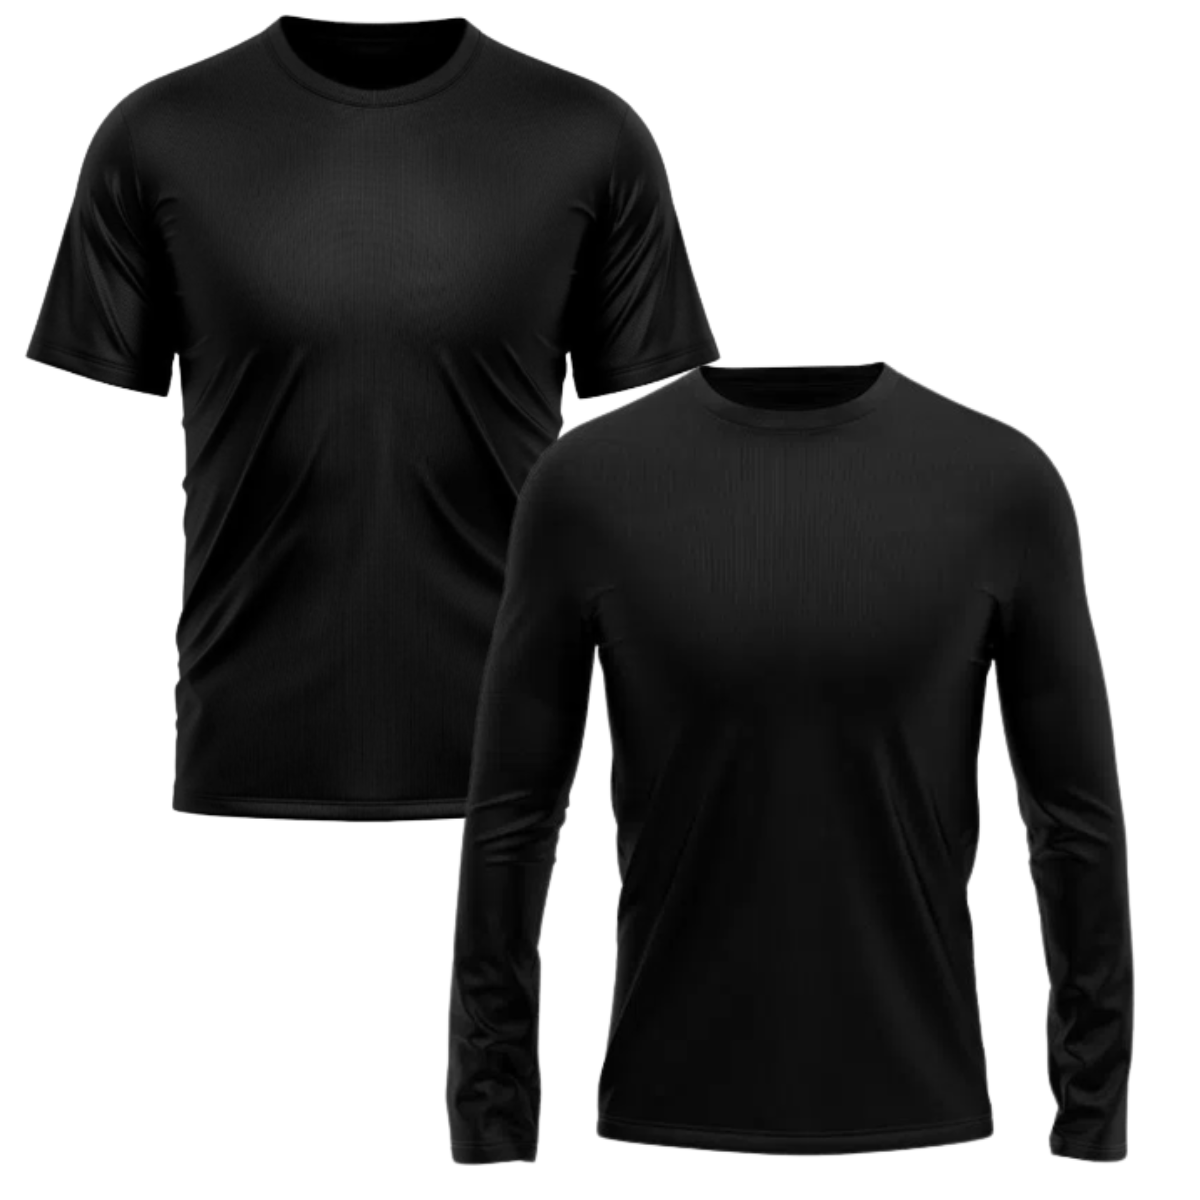 Kit 2 camisas UV manga longa e manga curta preto